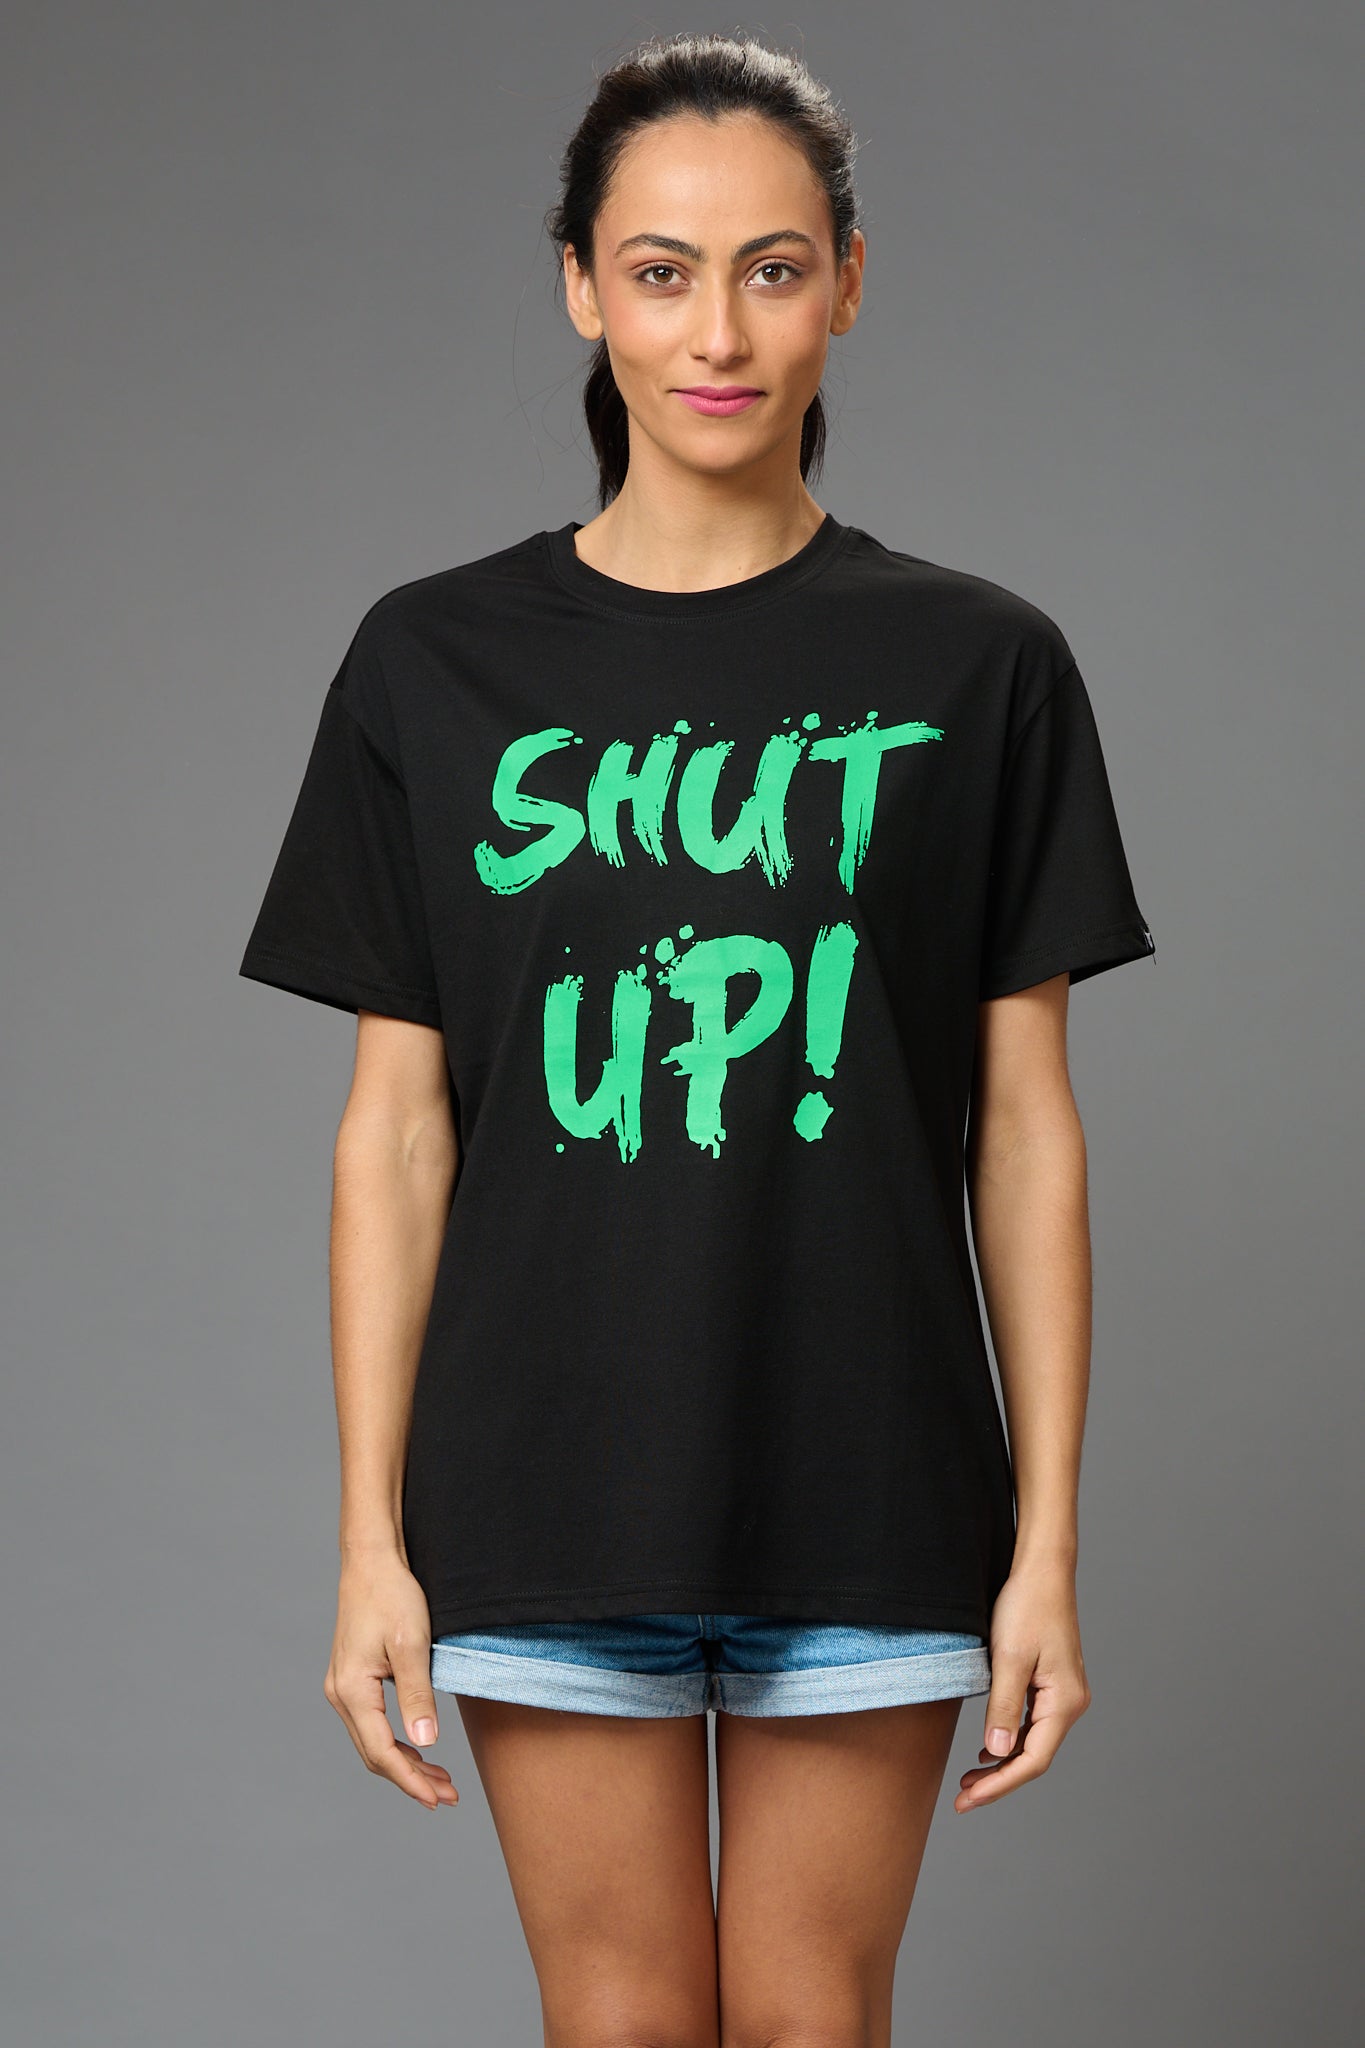 Shut Up! Printed Oversized T-Shirt for Women Oversized T-Shirt for Women - Go Devil